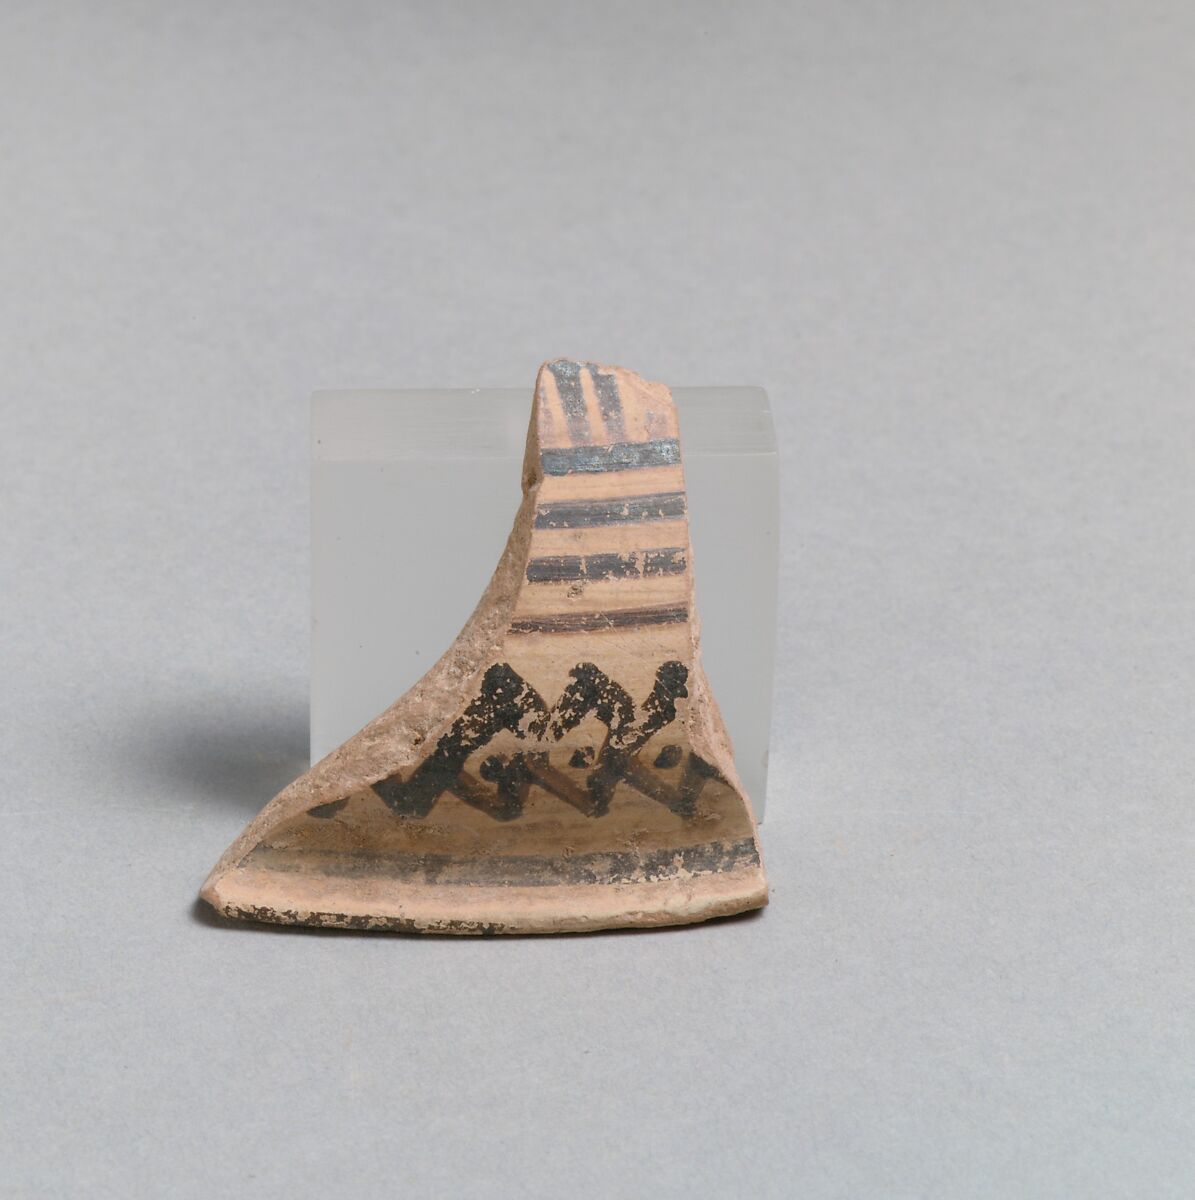 Vase fragment, Terracotta, Greek, Laconian 